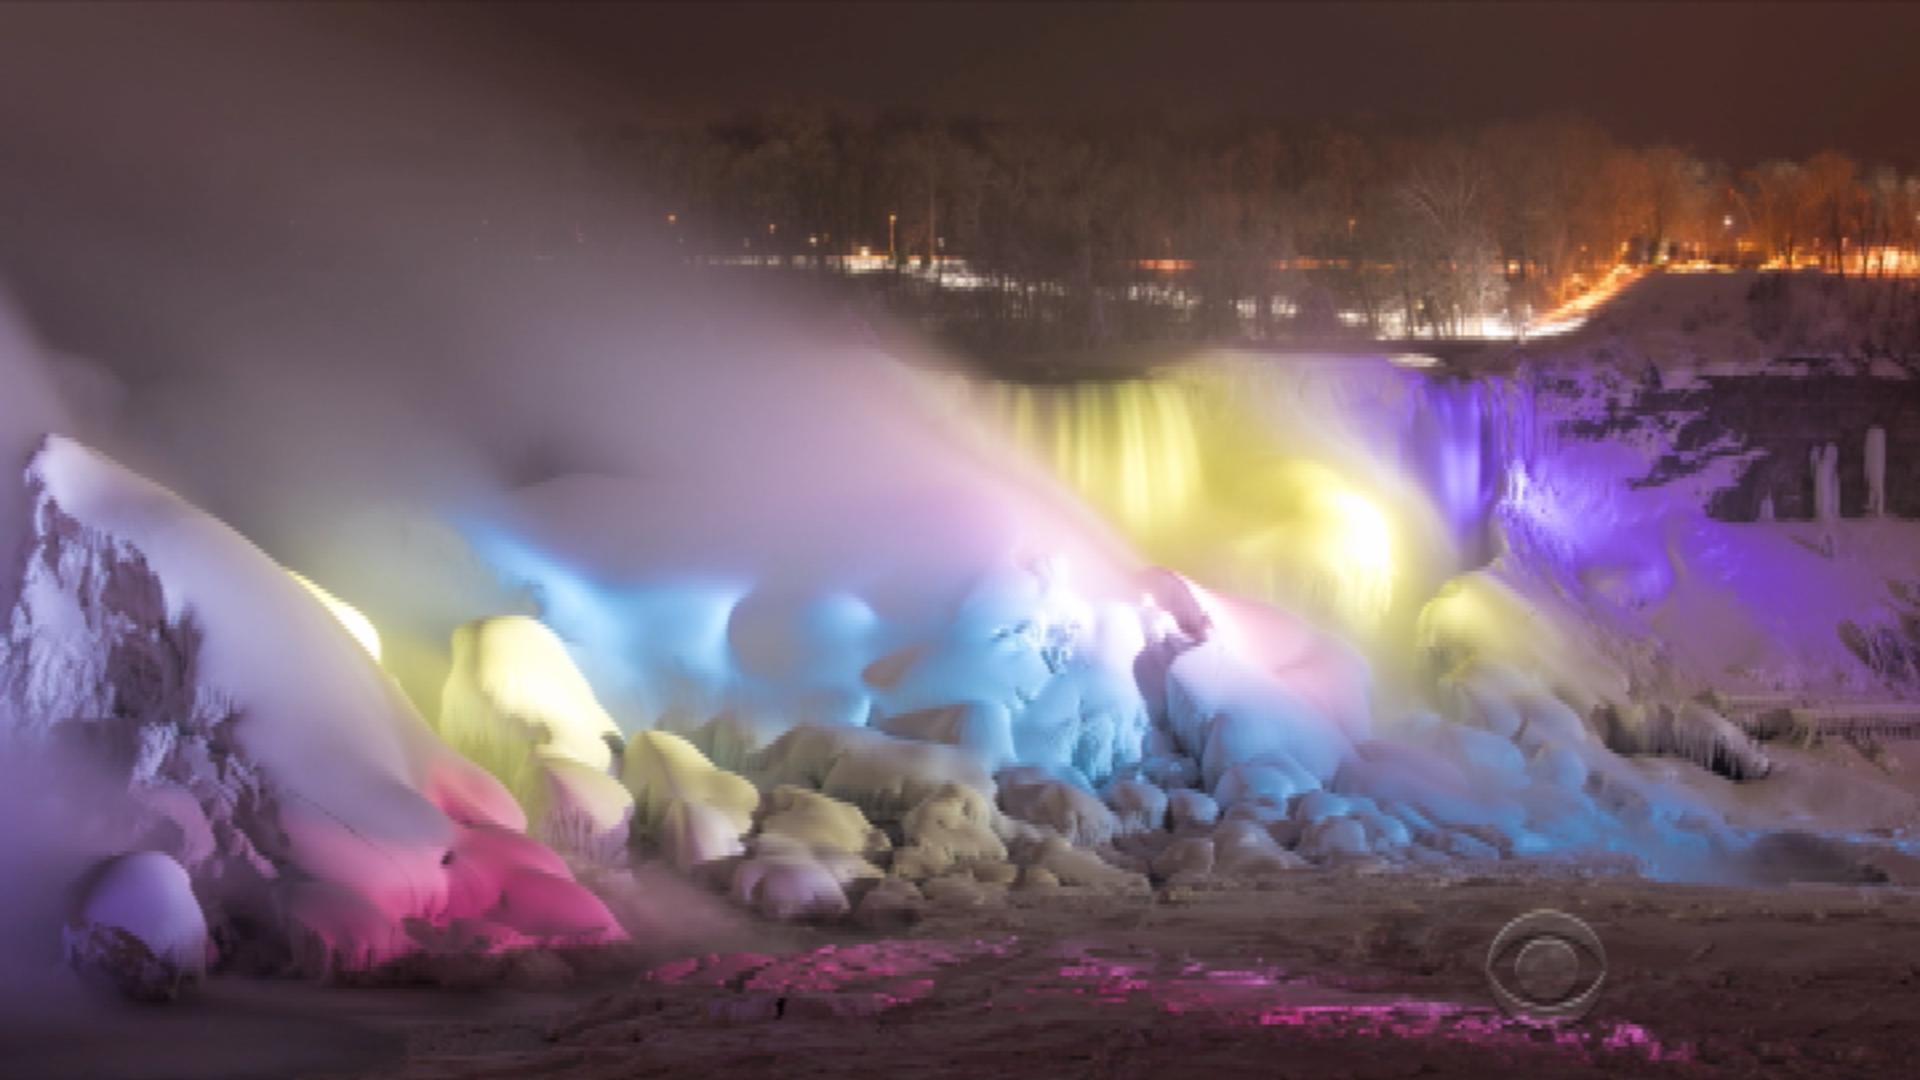 Niagara Falls unveils new LED lighting system - CBS News1920 x 1080